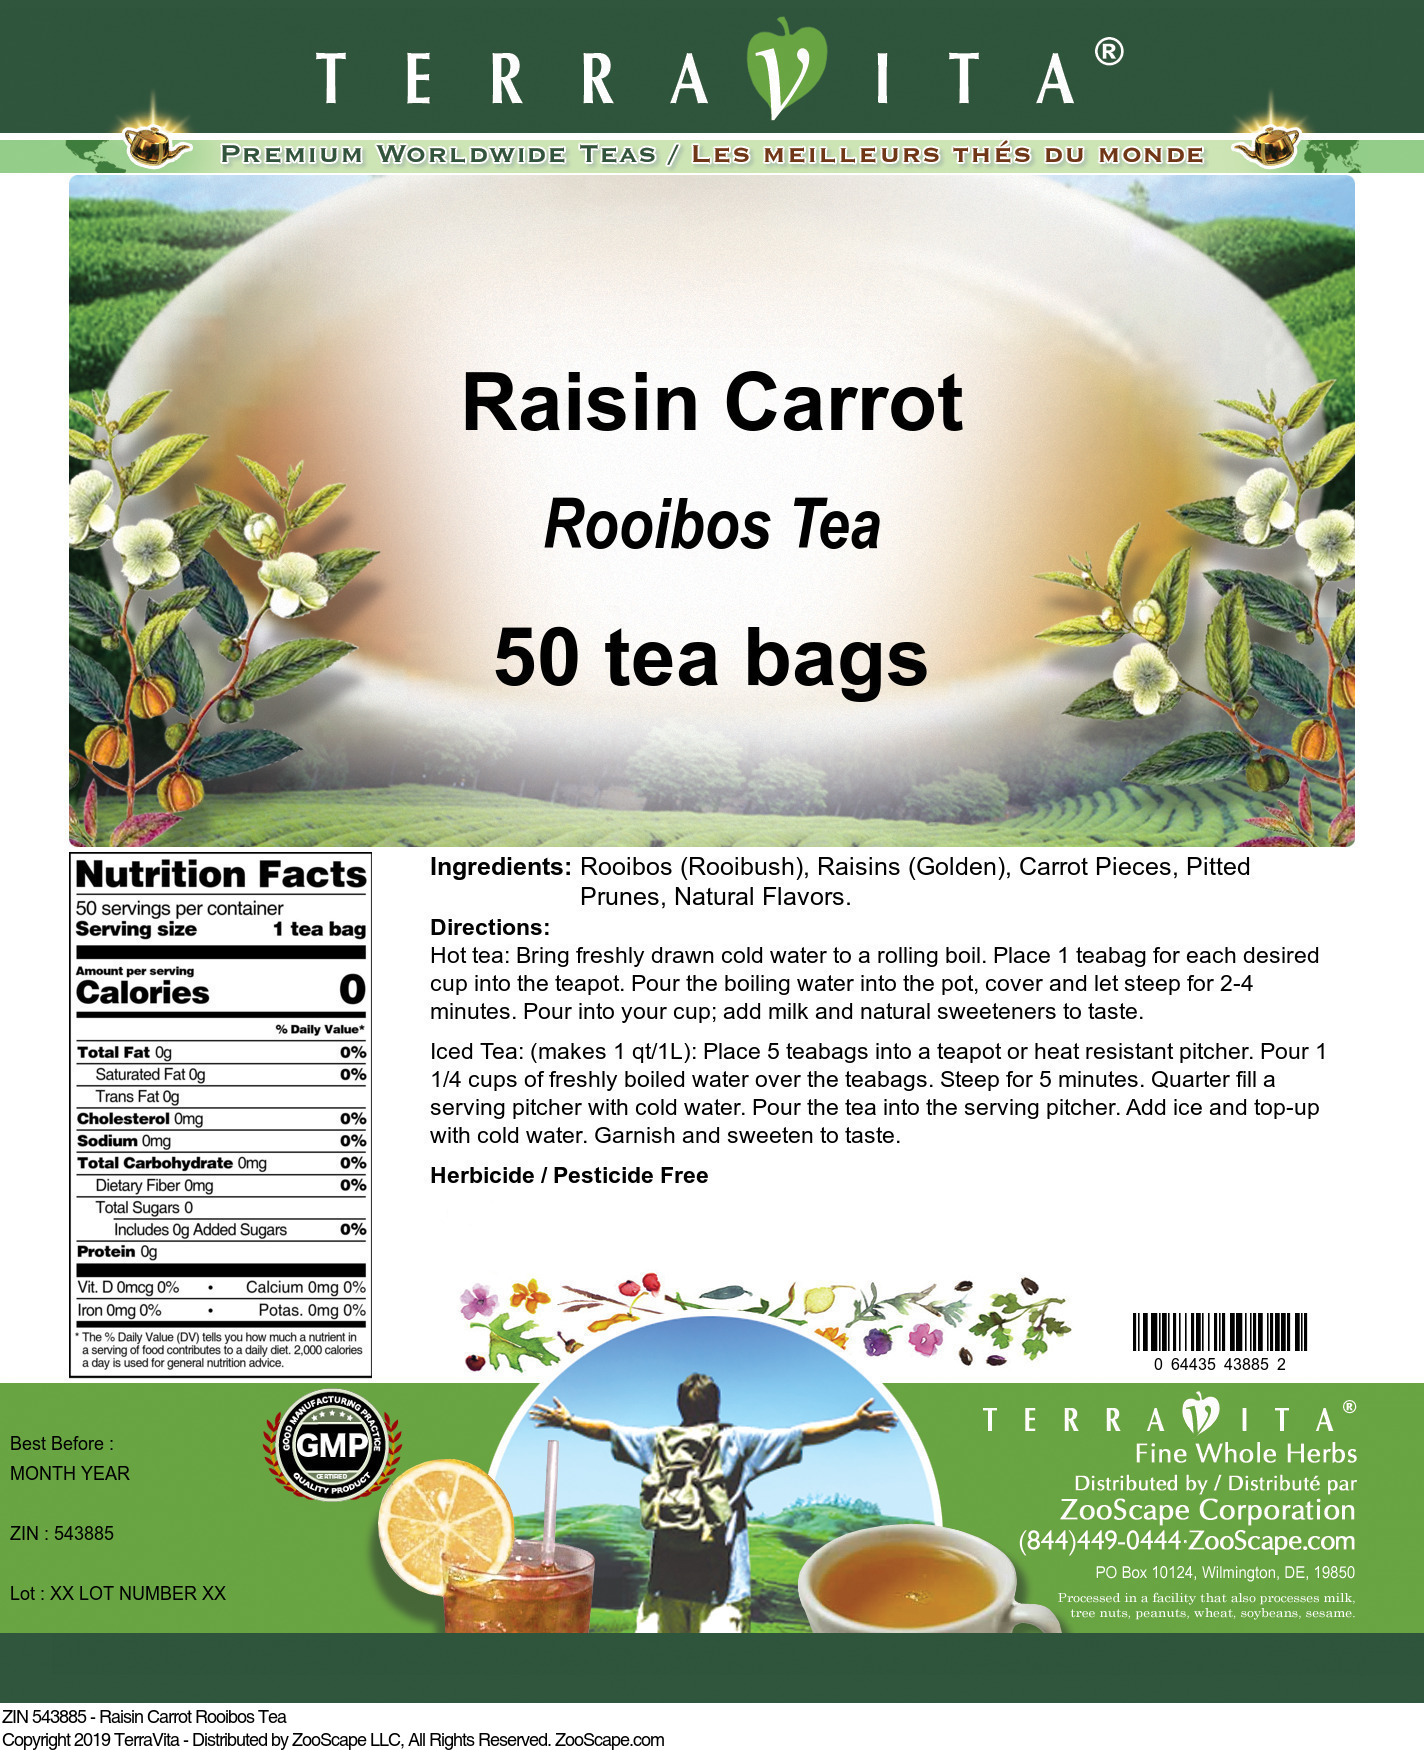 Raisin Carrot Rooibos Tea - Label